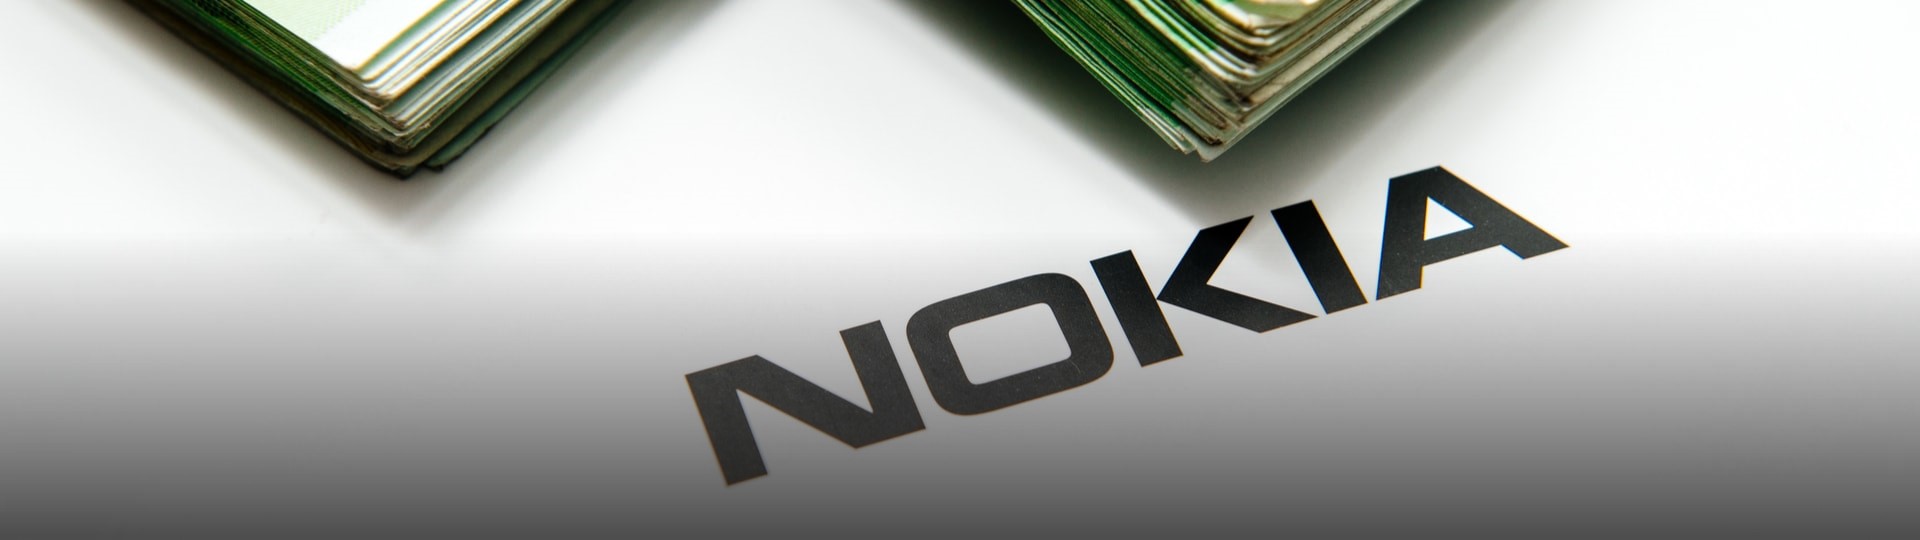 Akcie společnosti Nokia prožily volný pád